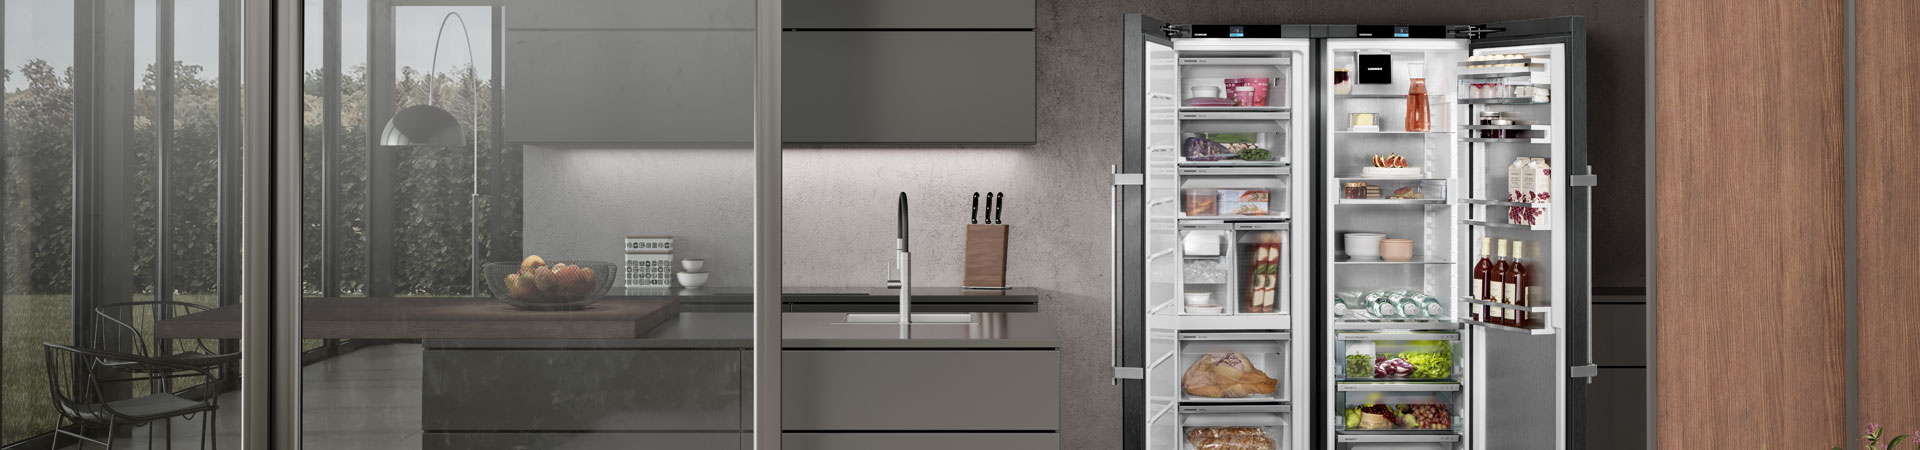 side-by-side-fridge-XRFbs5295-liebherr-ambient-1920x450